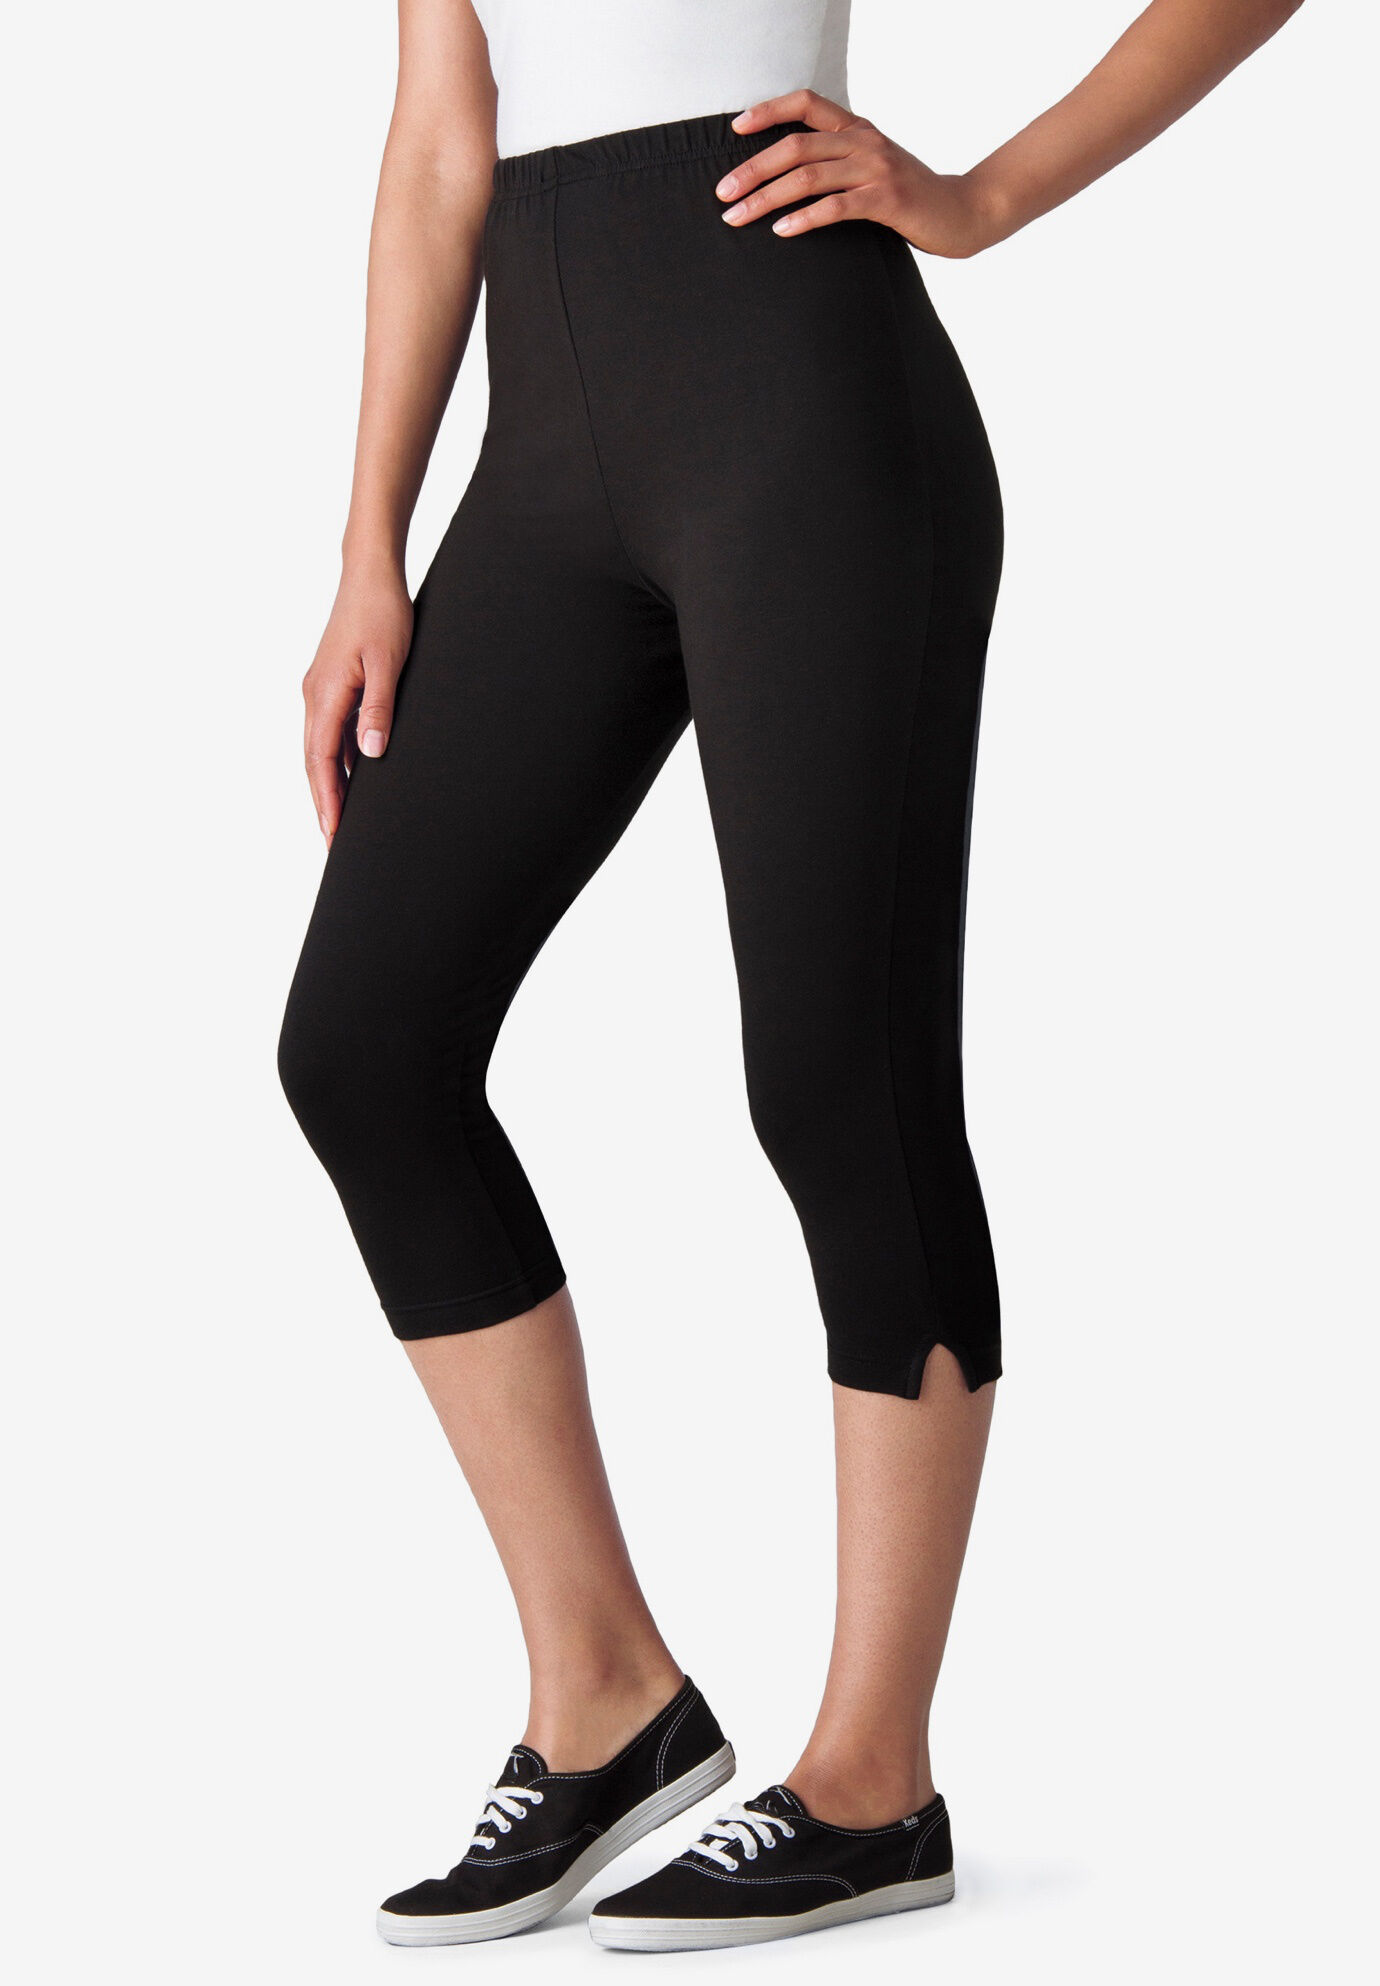 Black Leggings Cropped Length High Quality Cotton Capri Fitness Run Trousers 